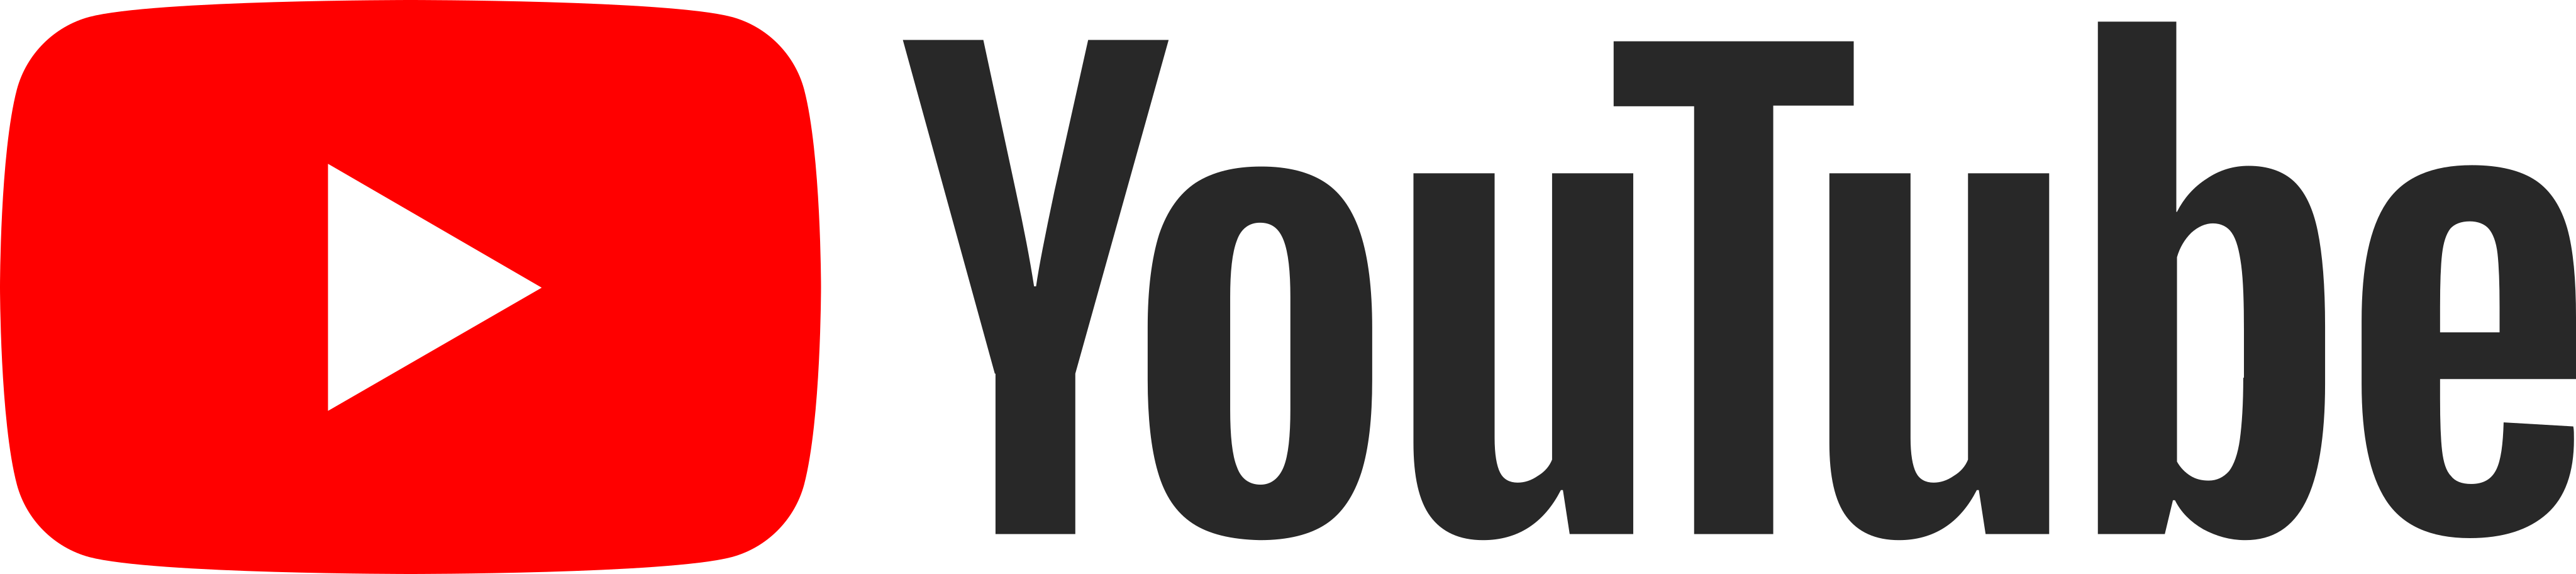 youtube-logo-9